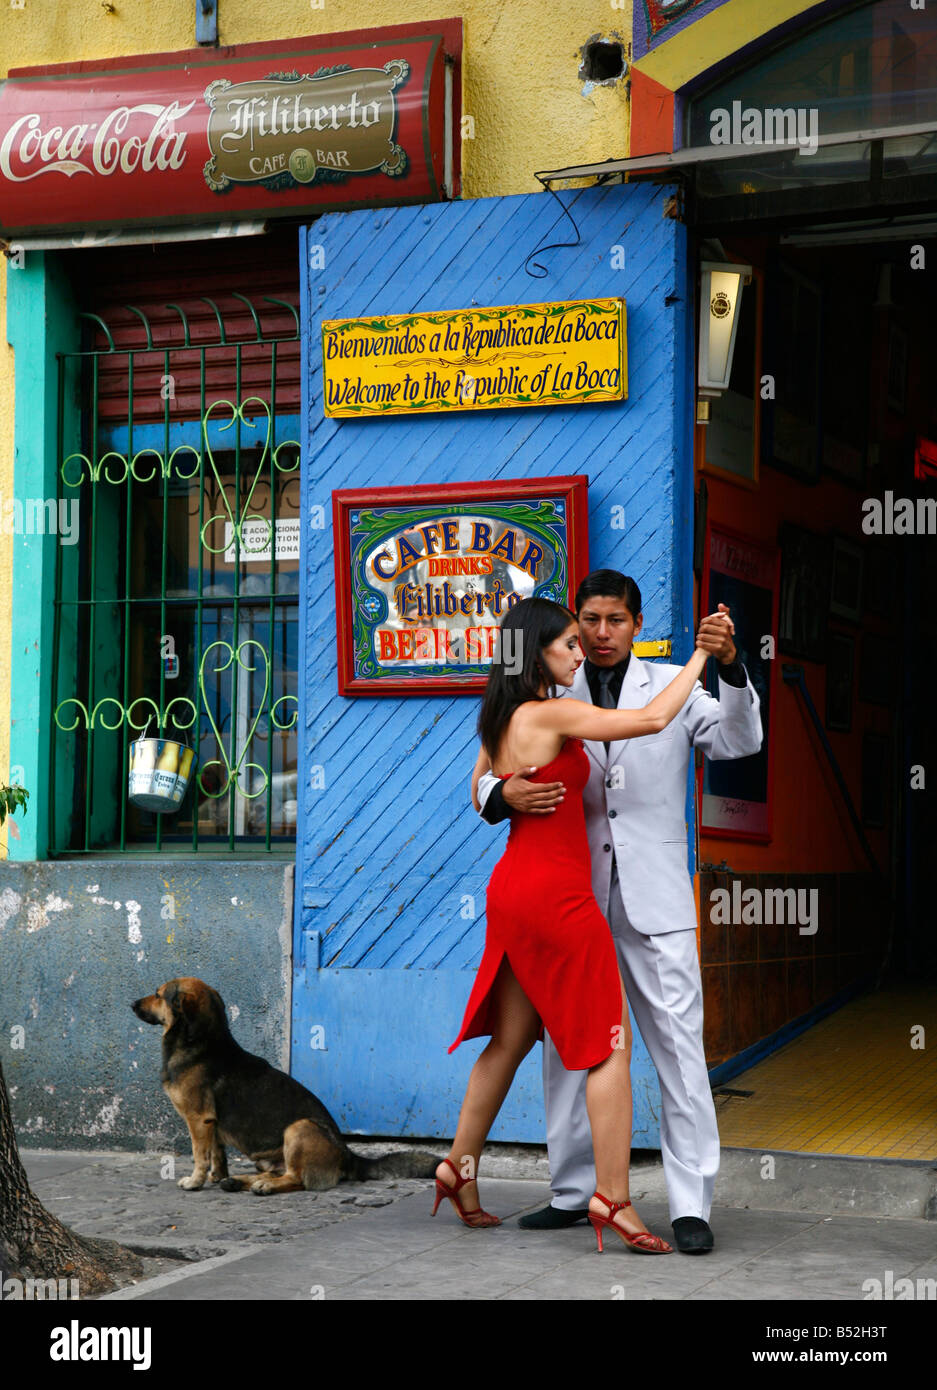 März 2008 - Bezirk Paare tanzen Tango La Boca in Buenos Aires Argentinien Stockfoto